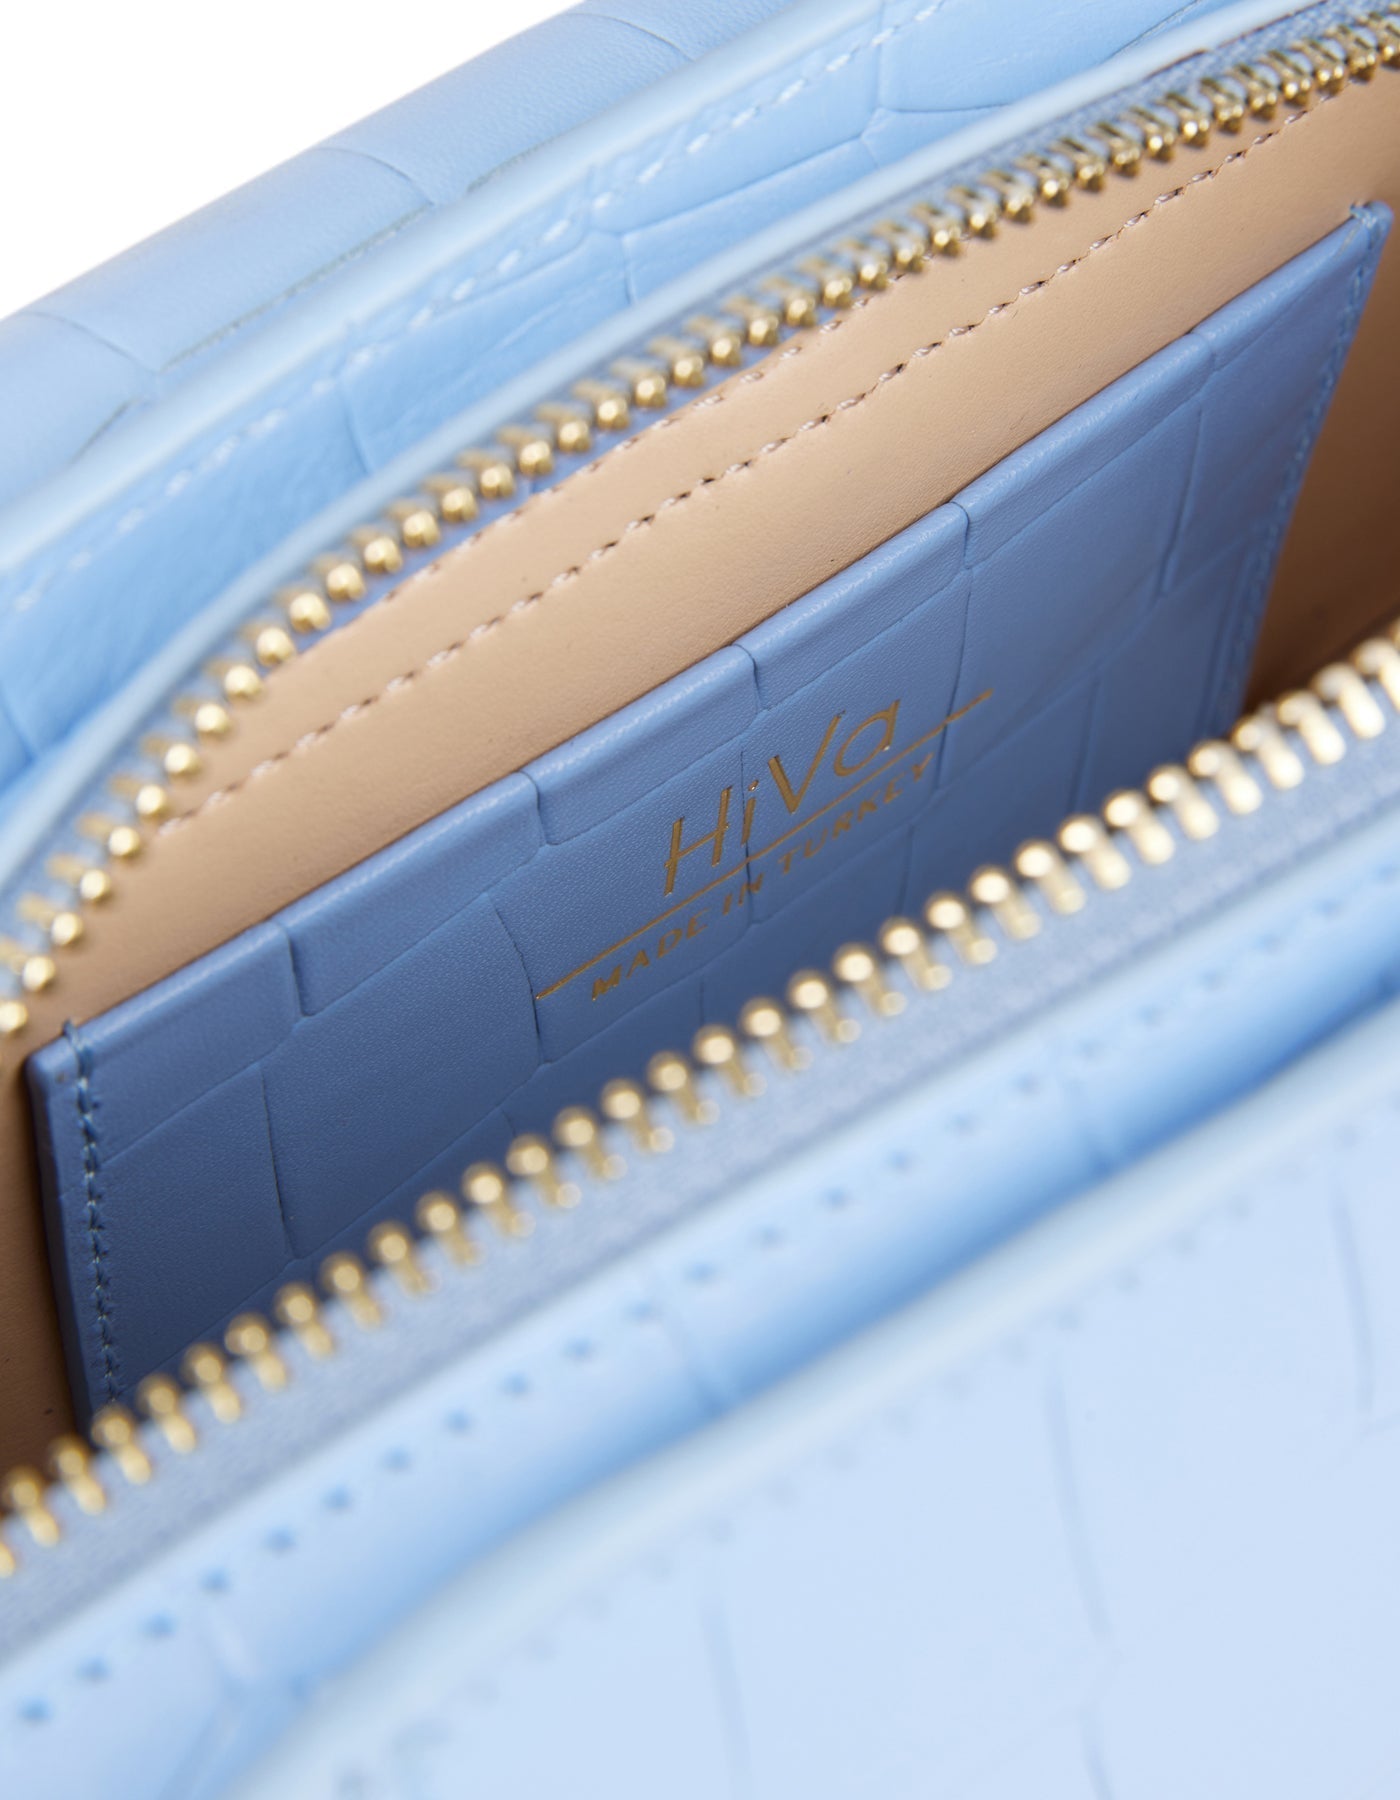 HiVa Atelier | Navis Shoulder Bag Tranquil Blue | Beautiful and Versatile